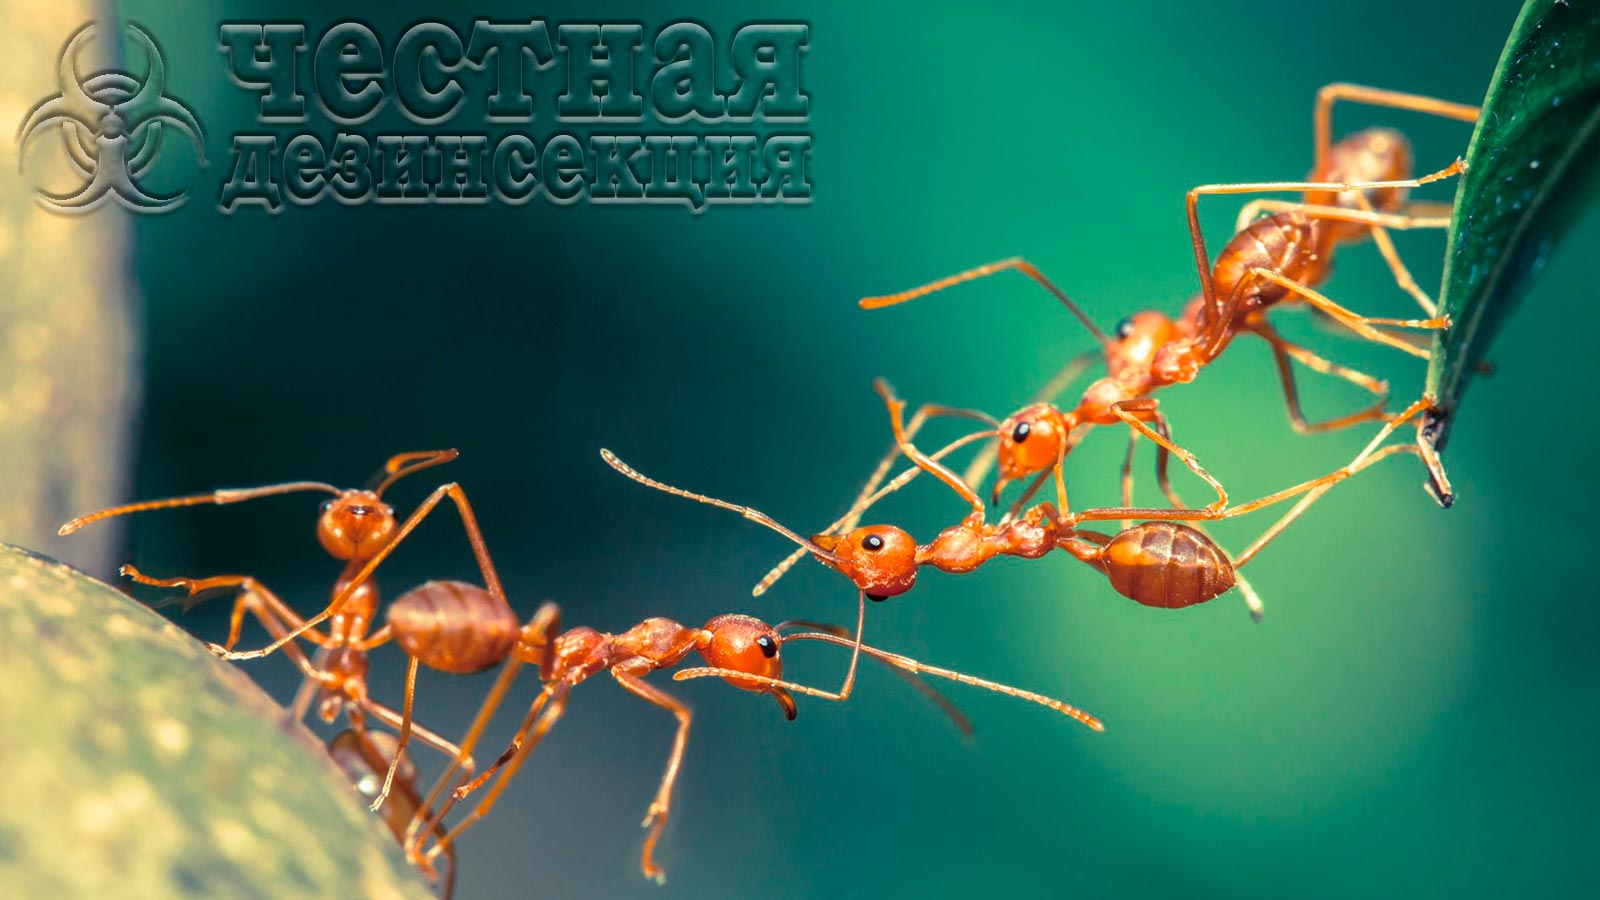 Ацетрин Супер для уничтожения муравьев